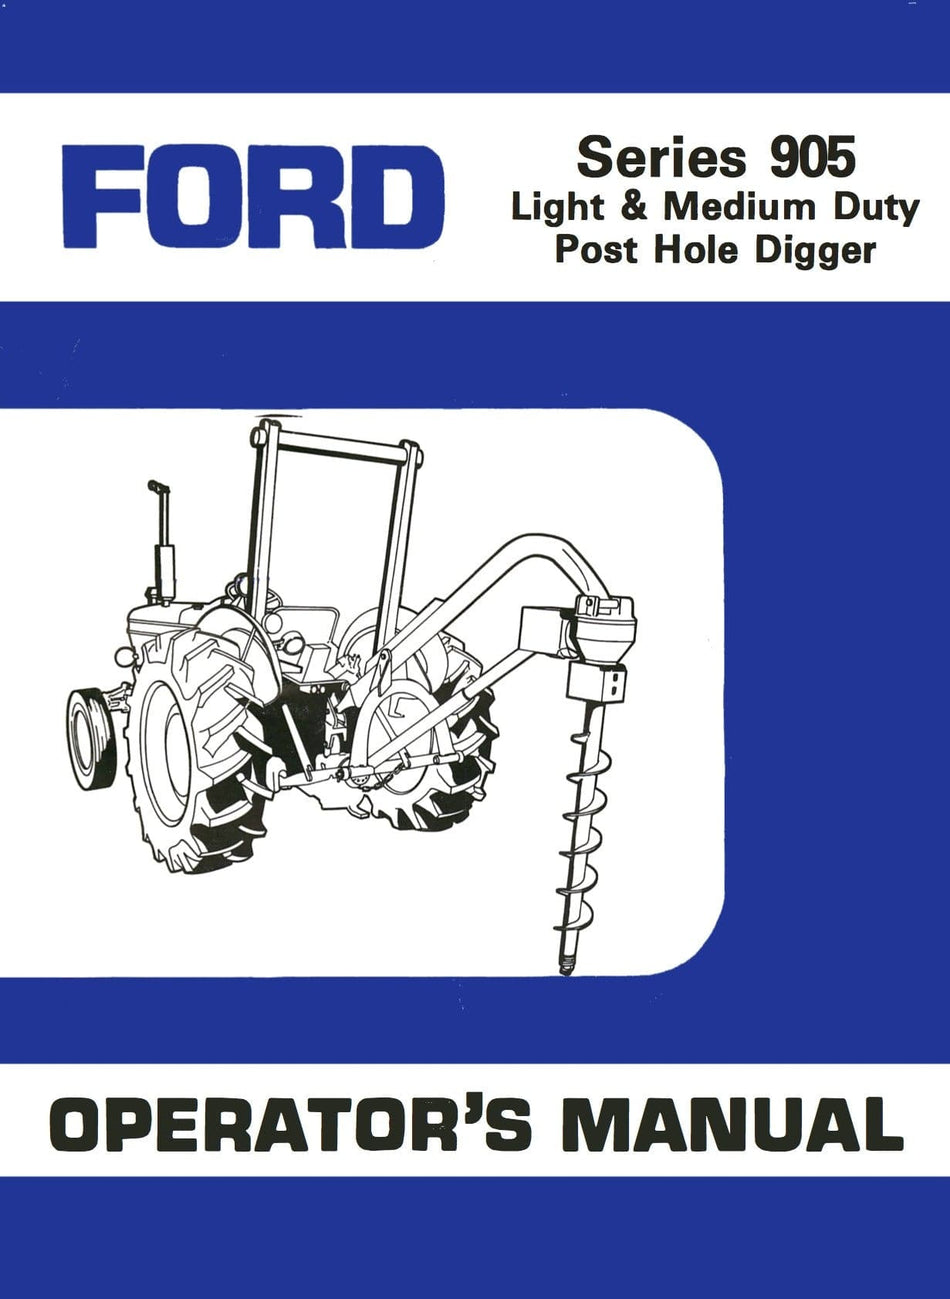 Ford Series 905 Light & Medium Duty Post Hole Digger - Operator's Manual - Ag Manuals - A Provider of Digital Farm Manuals - 1